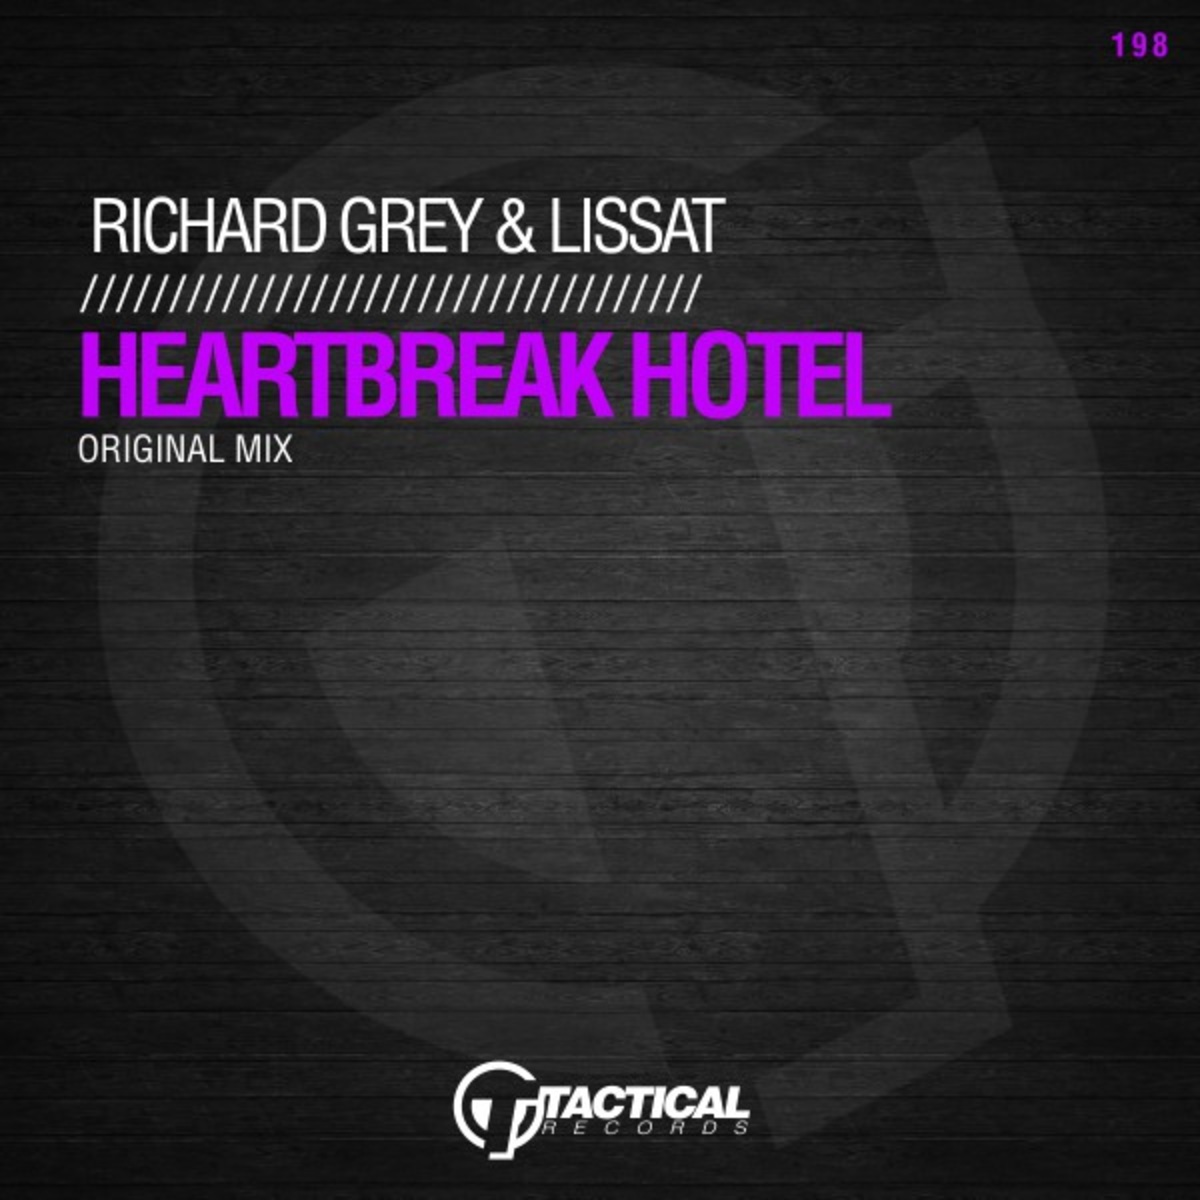 Richard Grey & Lissat - Heartbreak Hotel / Tactical Records